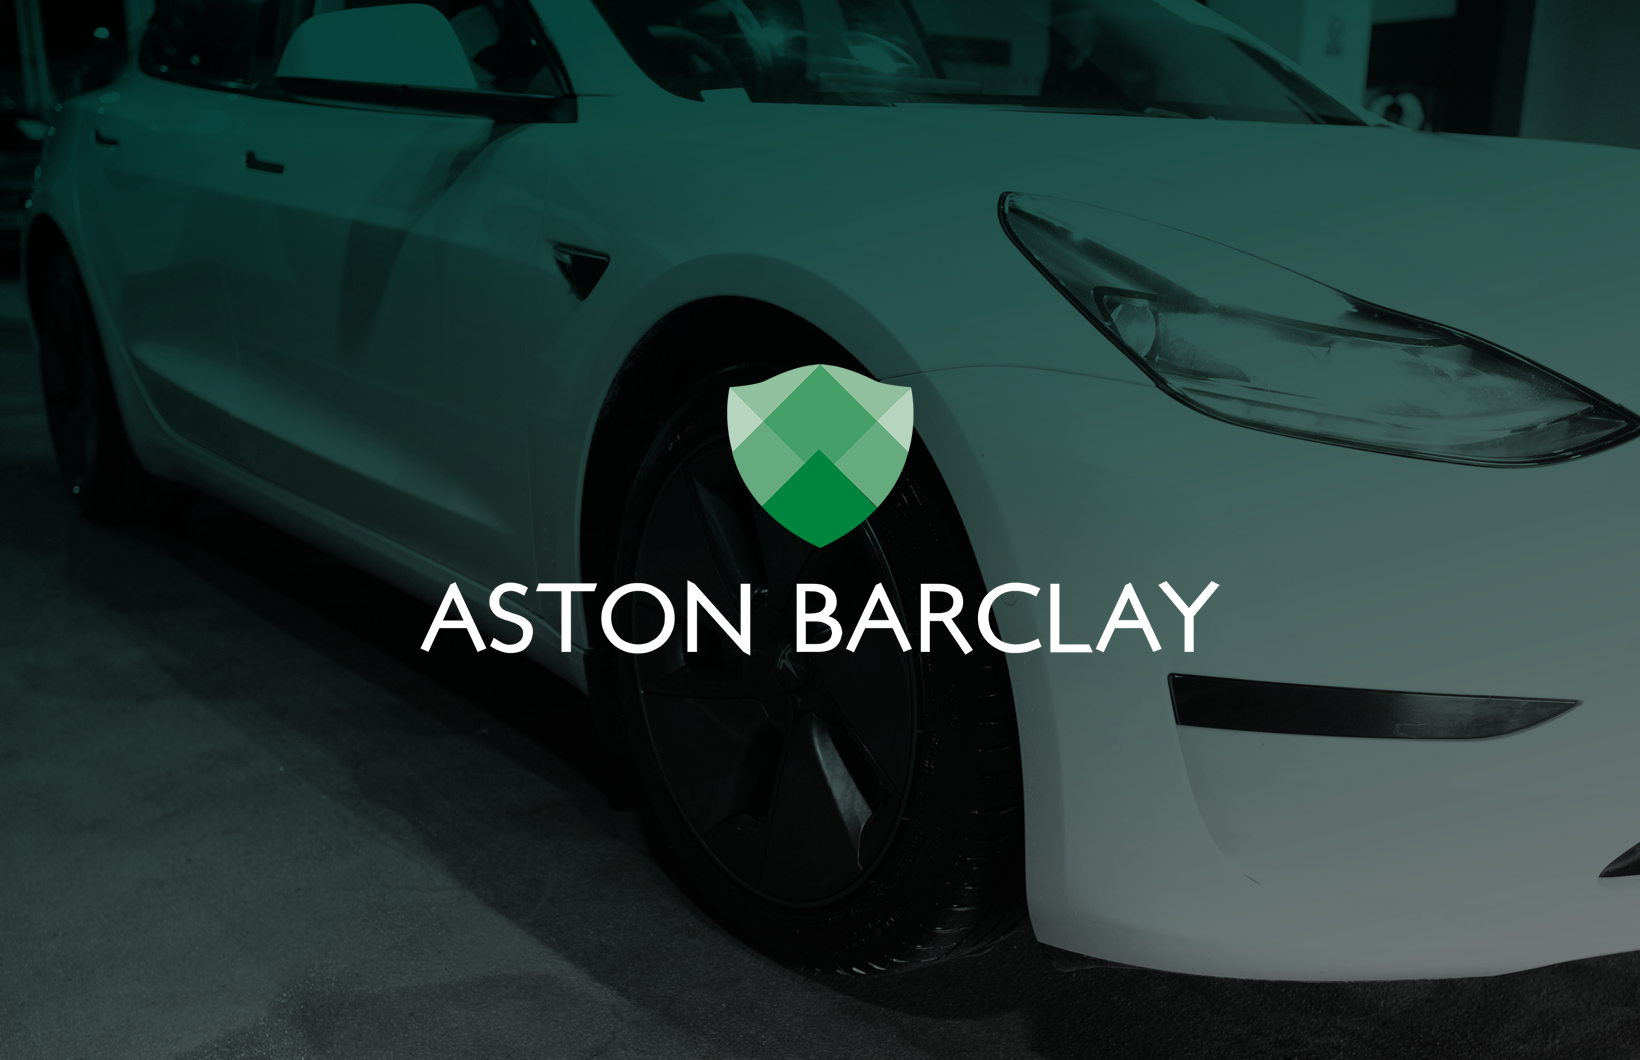 Aston Barclay Vehicle Remarketing